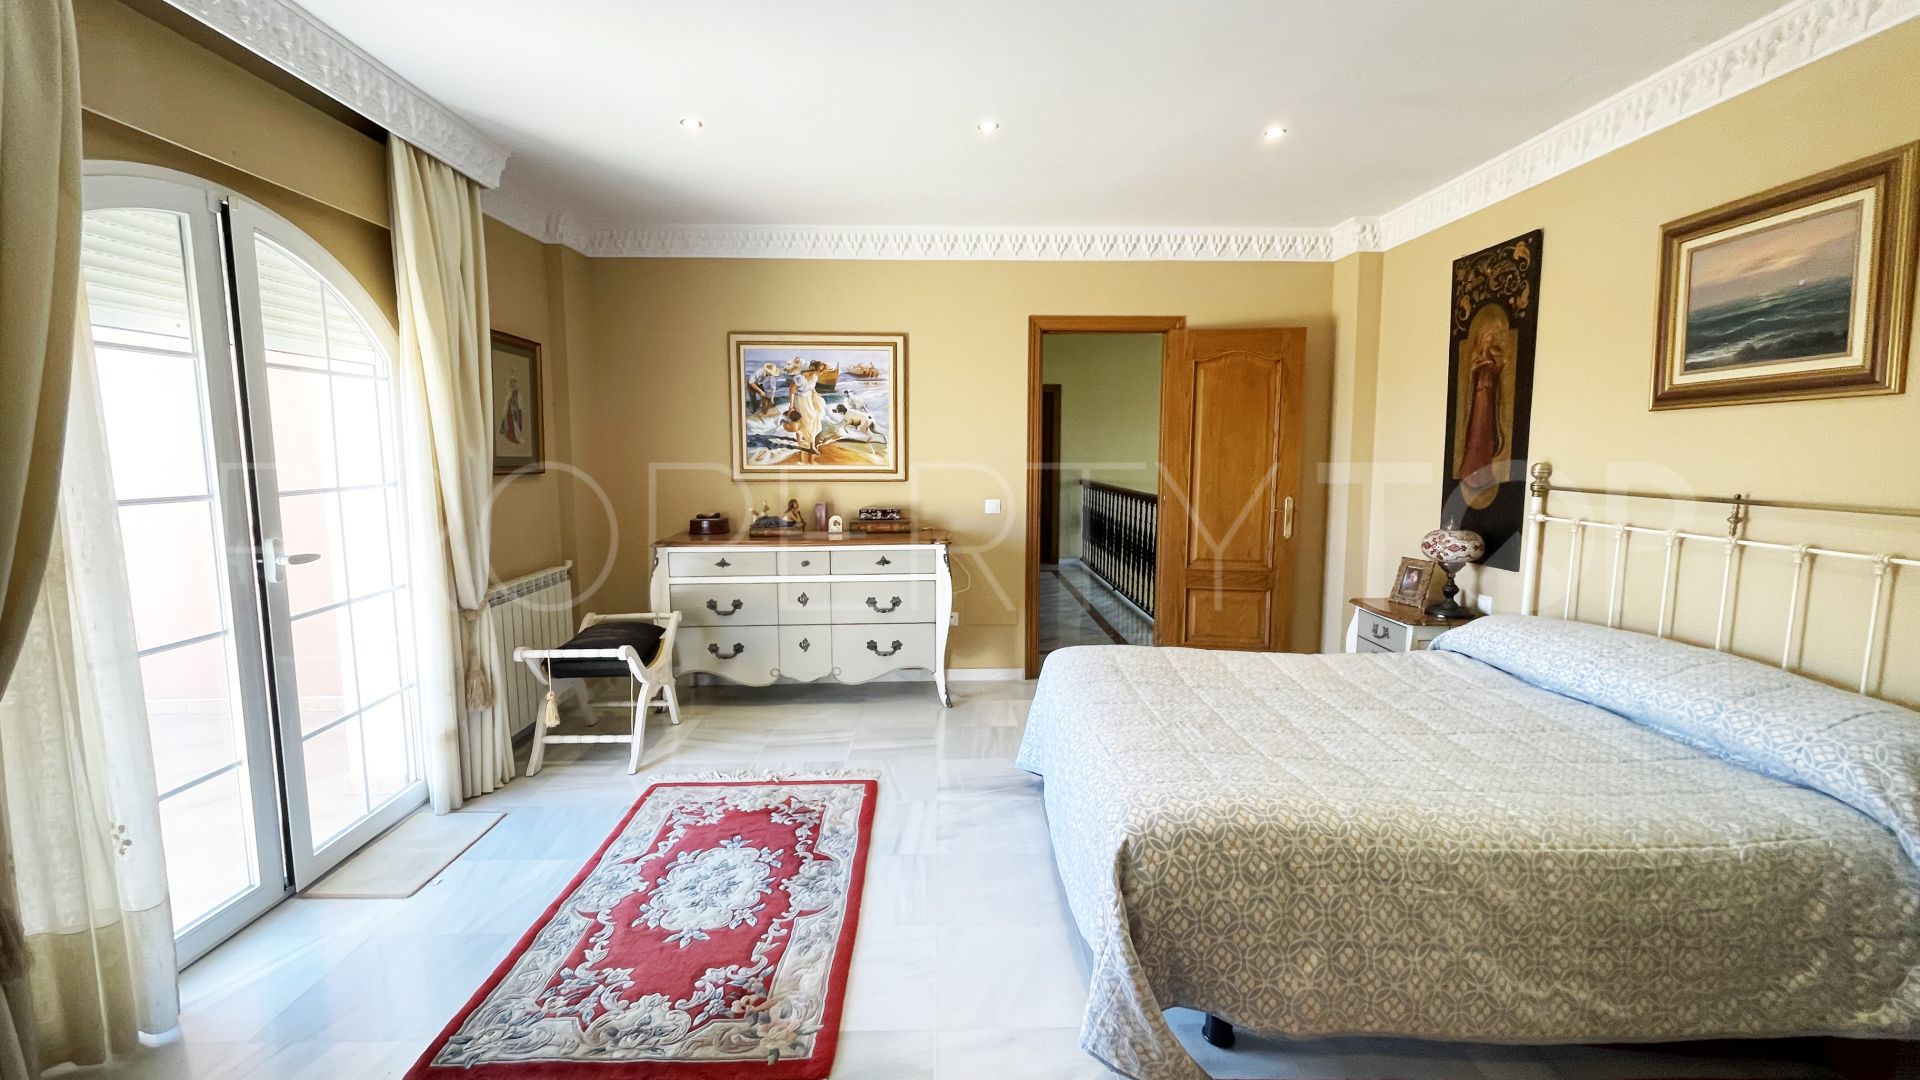 For sale Guadalobon villa with 4 bedrooms